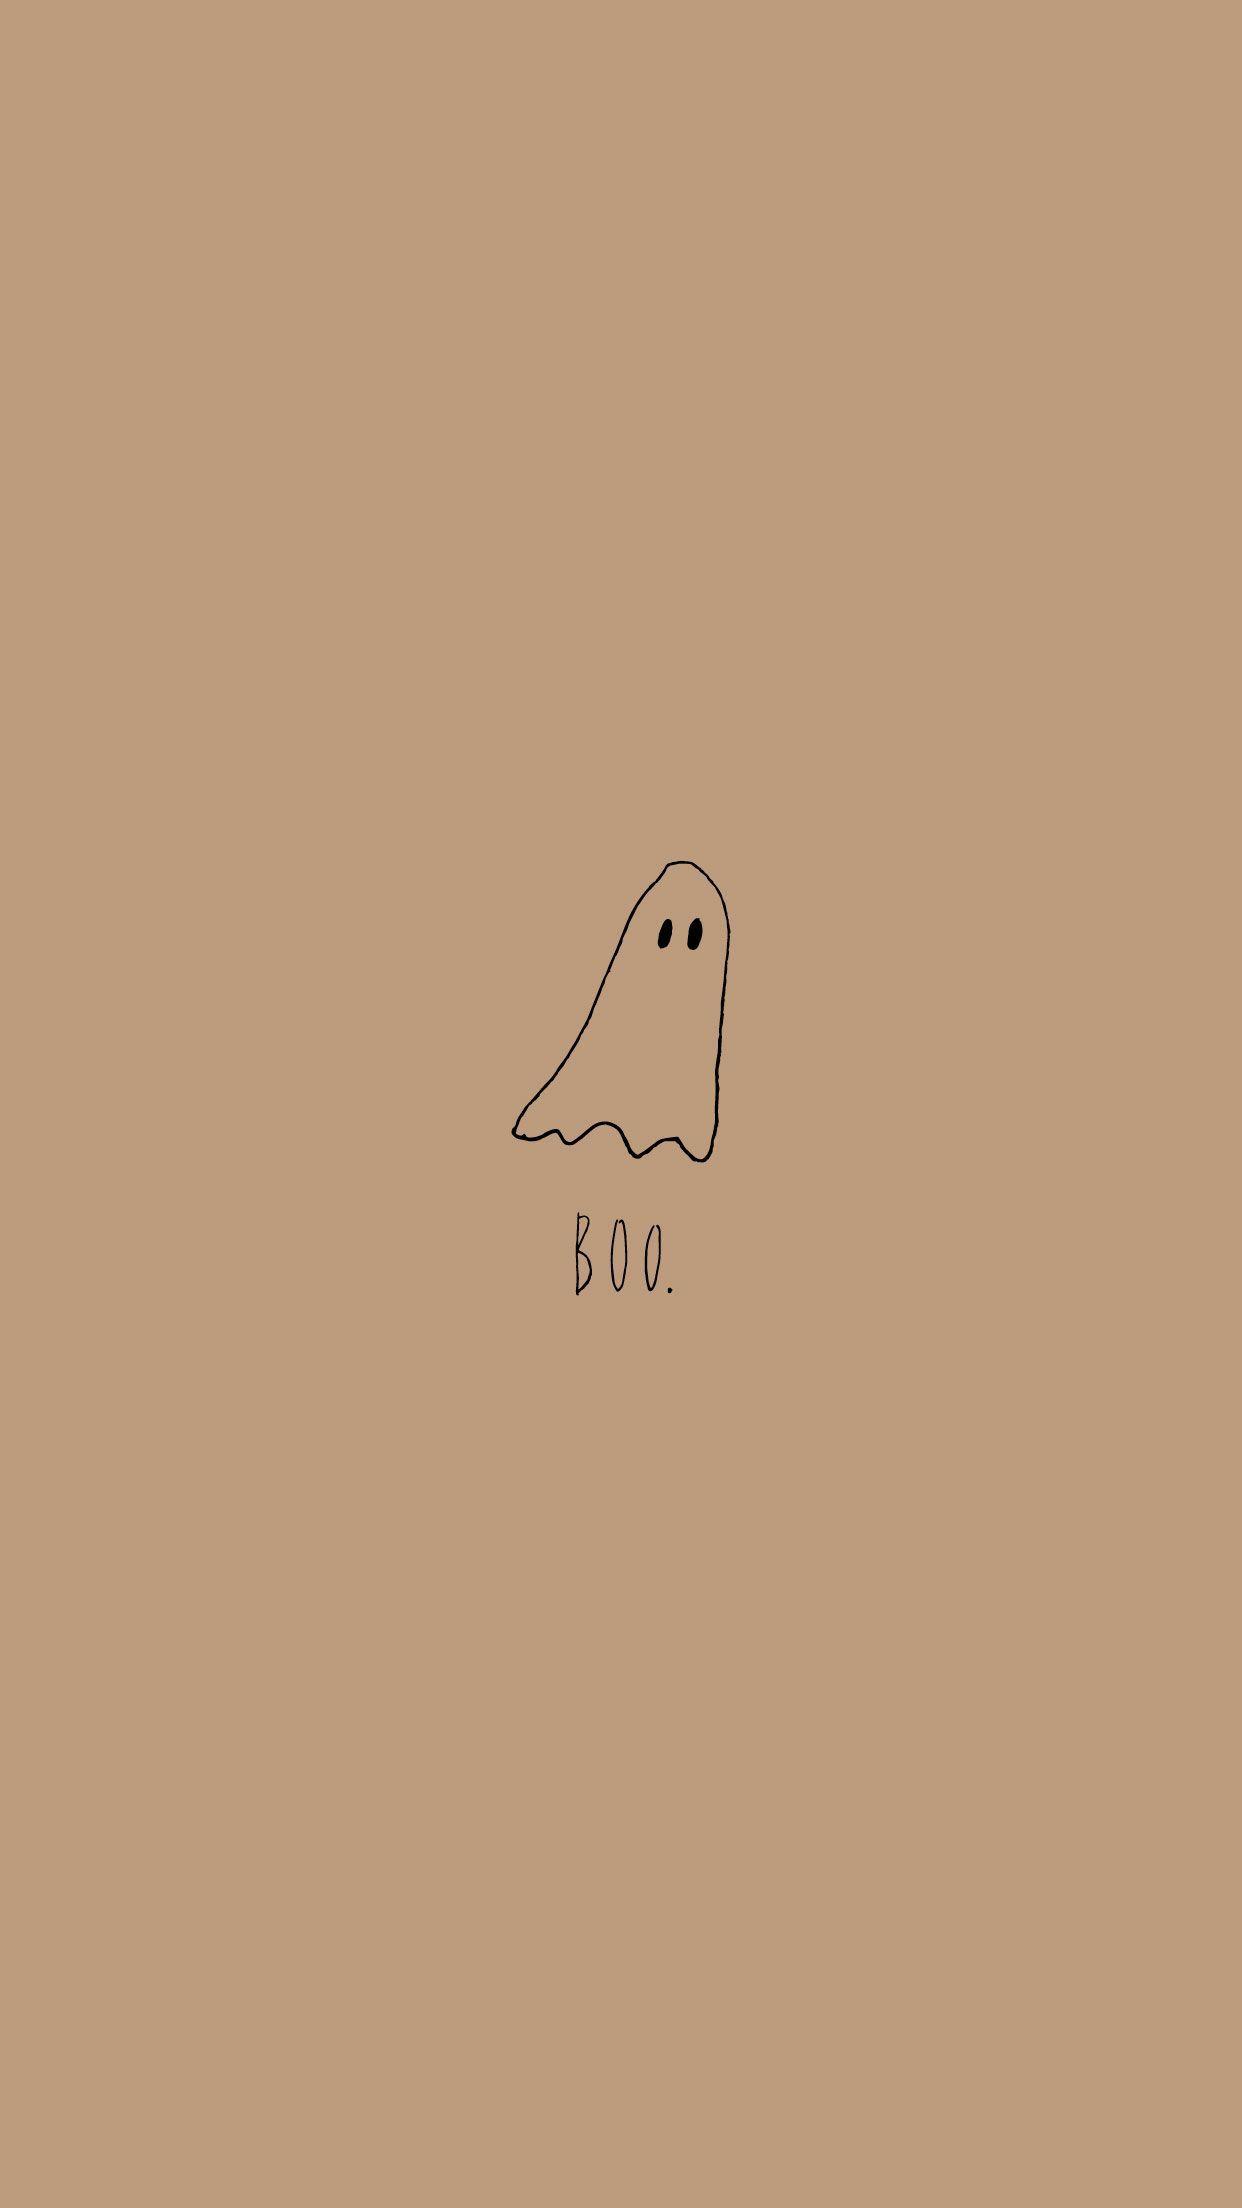 Happy Halloween Wallpaper Cute Spooky Ghosts Stock Vector Royalty Free  2008189397  Shutterstock